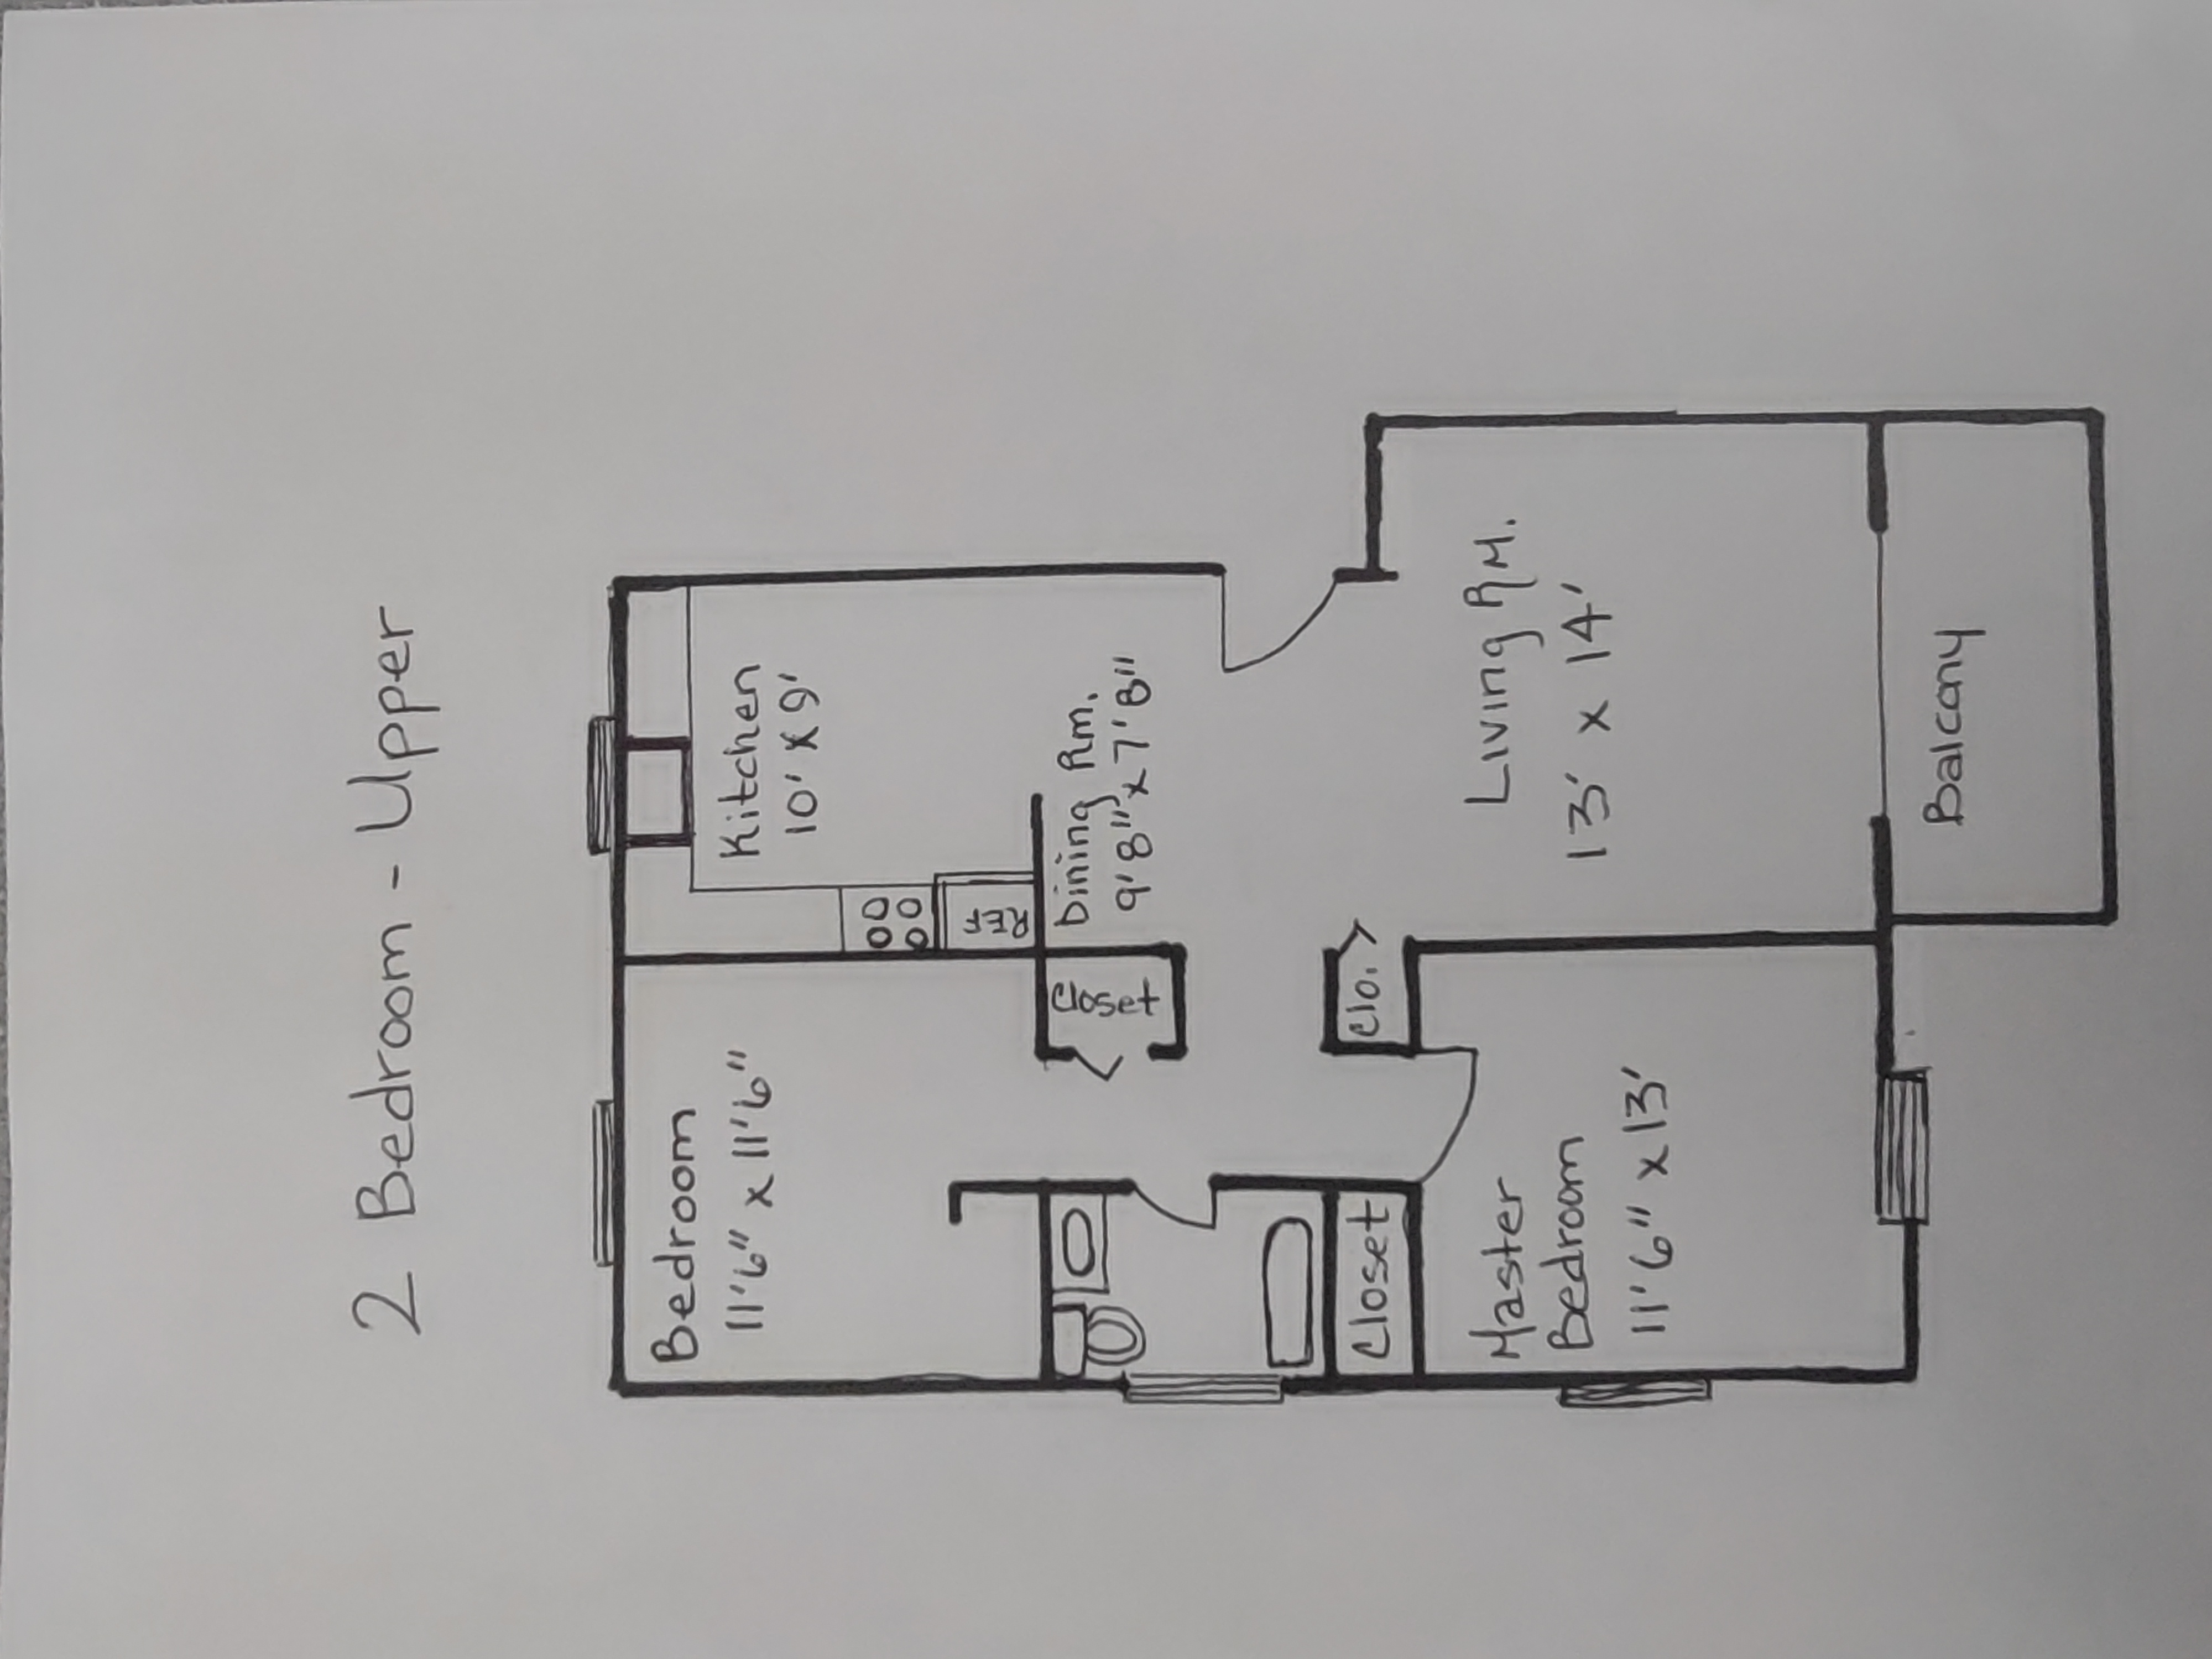 Clarkston Place 2 Bedroom floorplan